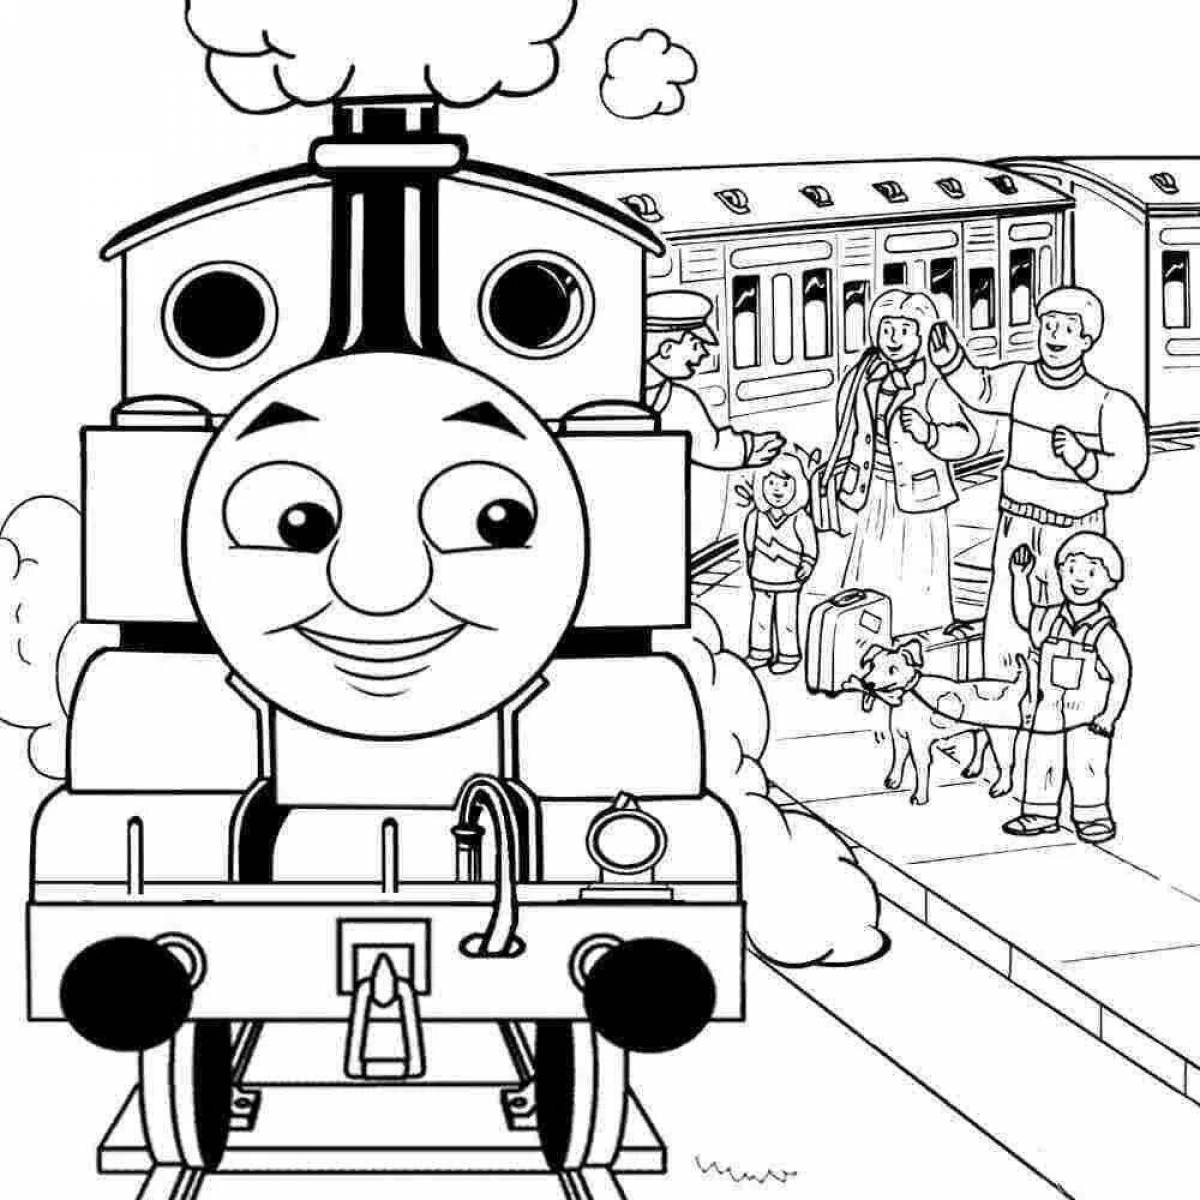 Thomas' fabulous train coloring page